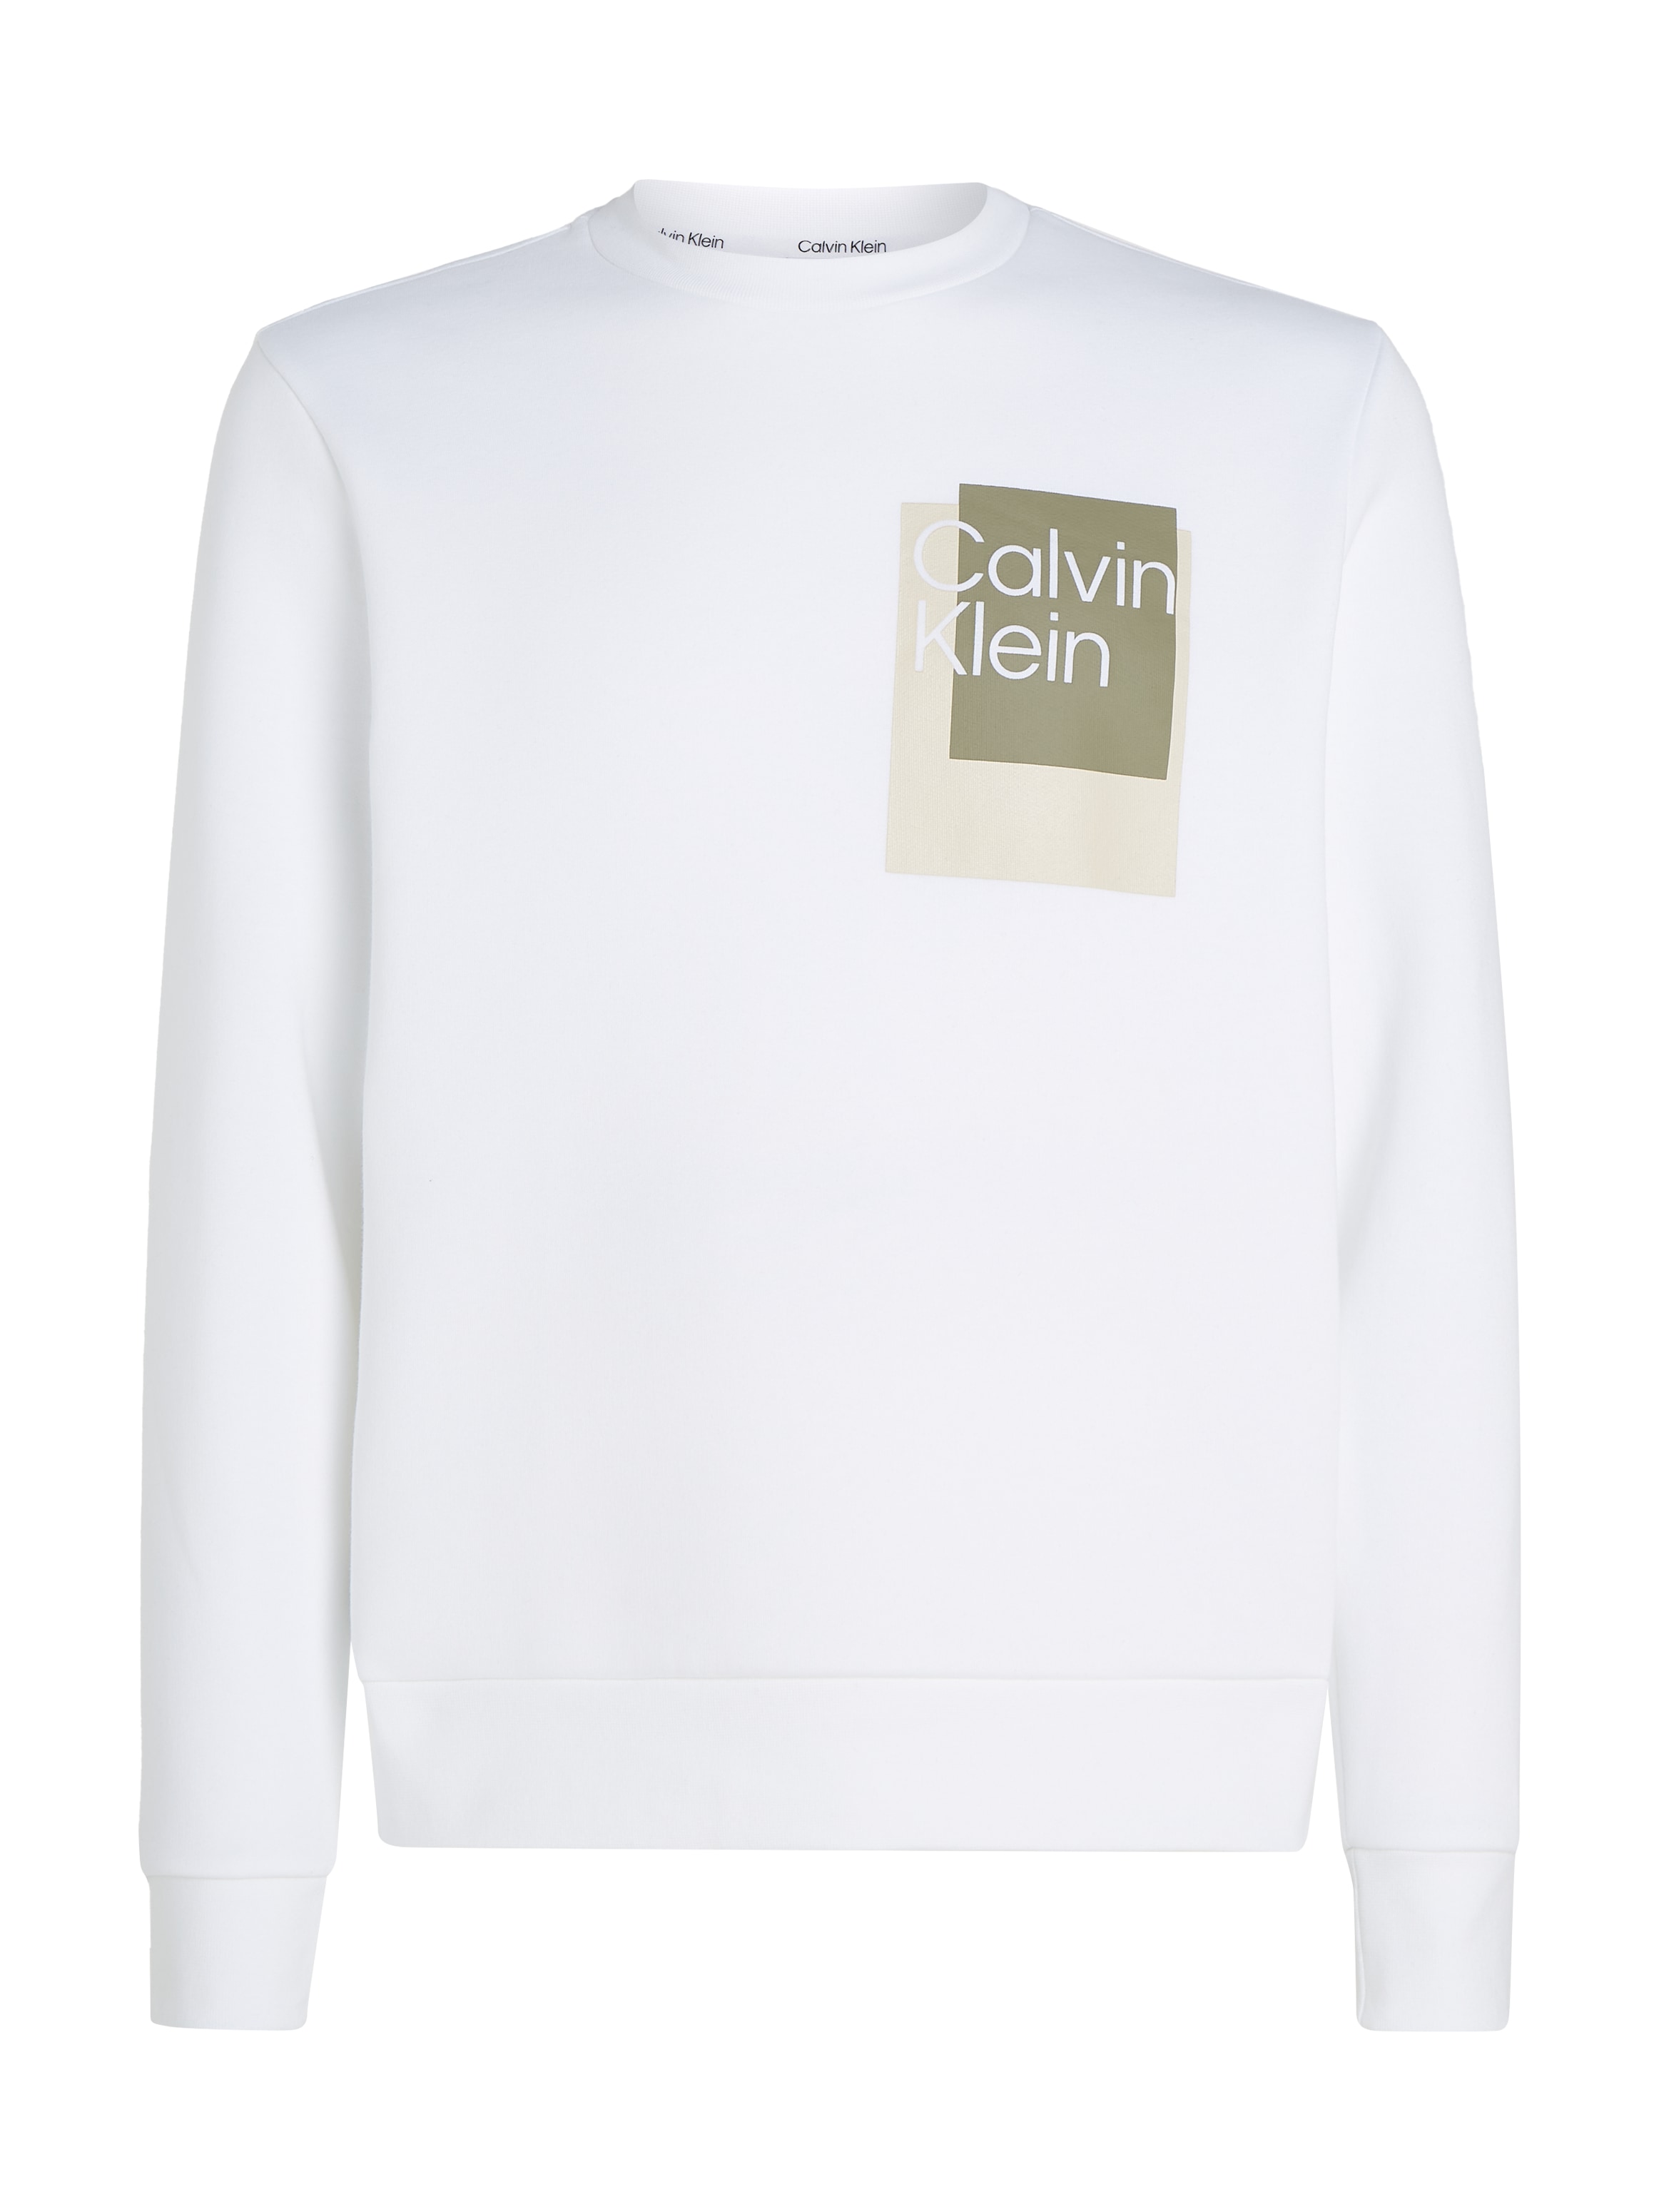 SWEATSHIRT« »OVERLAY Klein Calvin LOGO Sweatshirt BOX kaufen